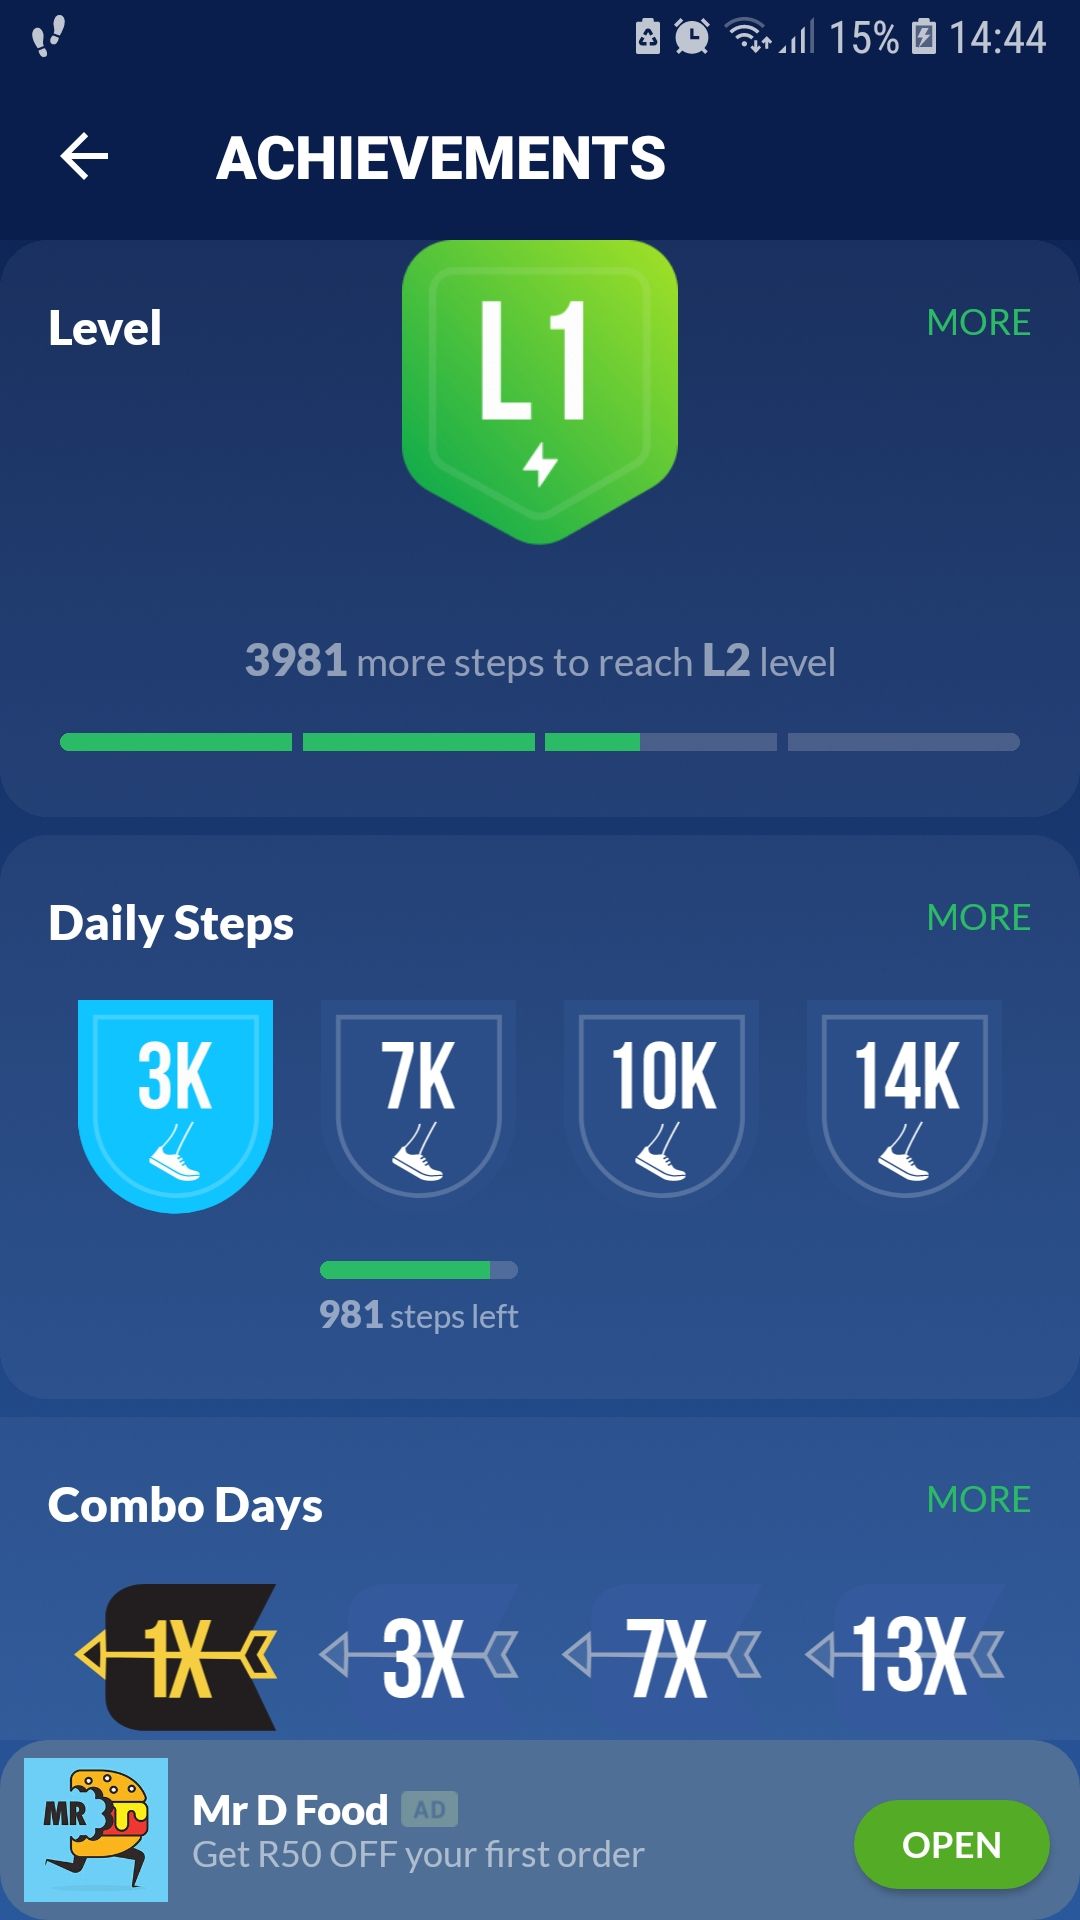 Step Counter pedometer mobile app achievements